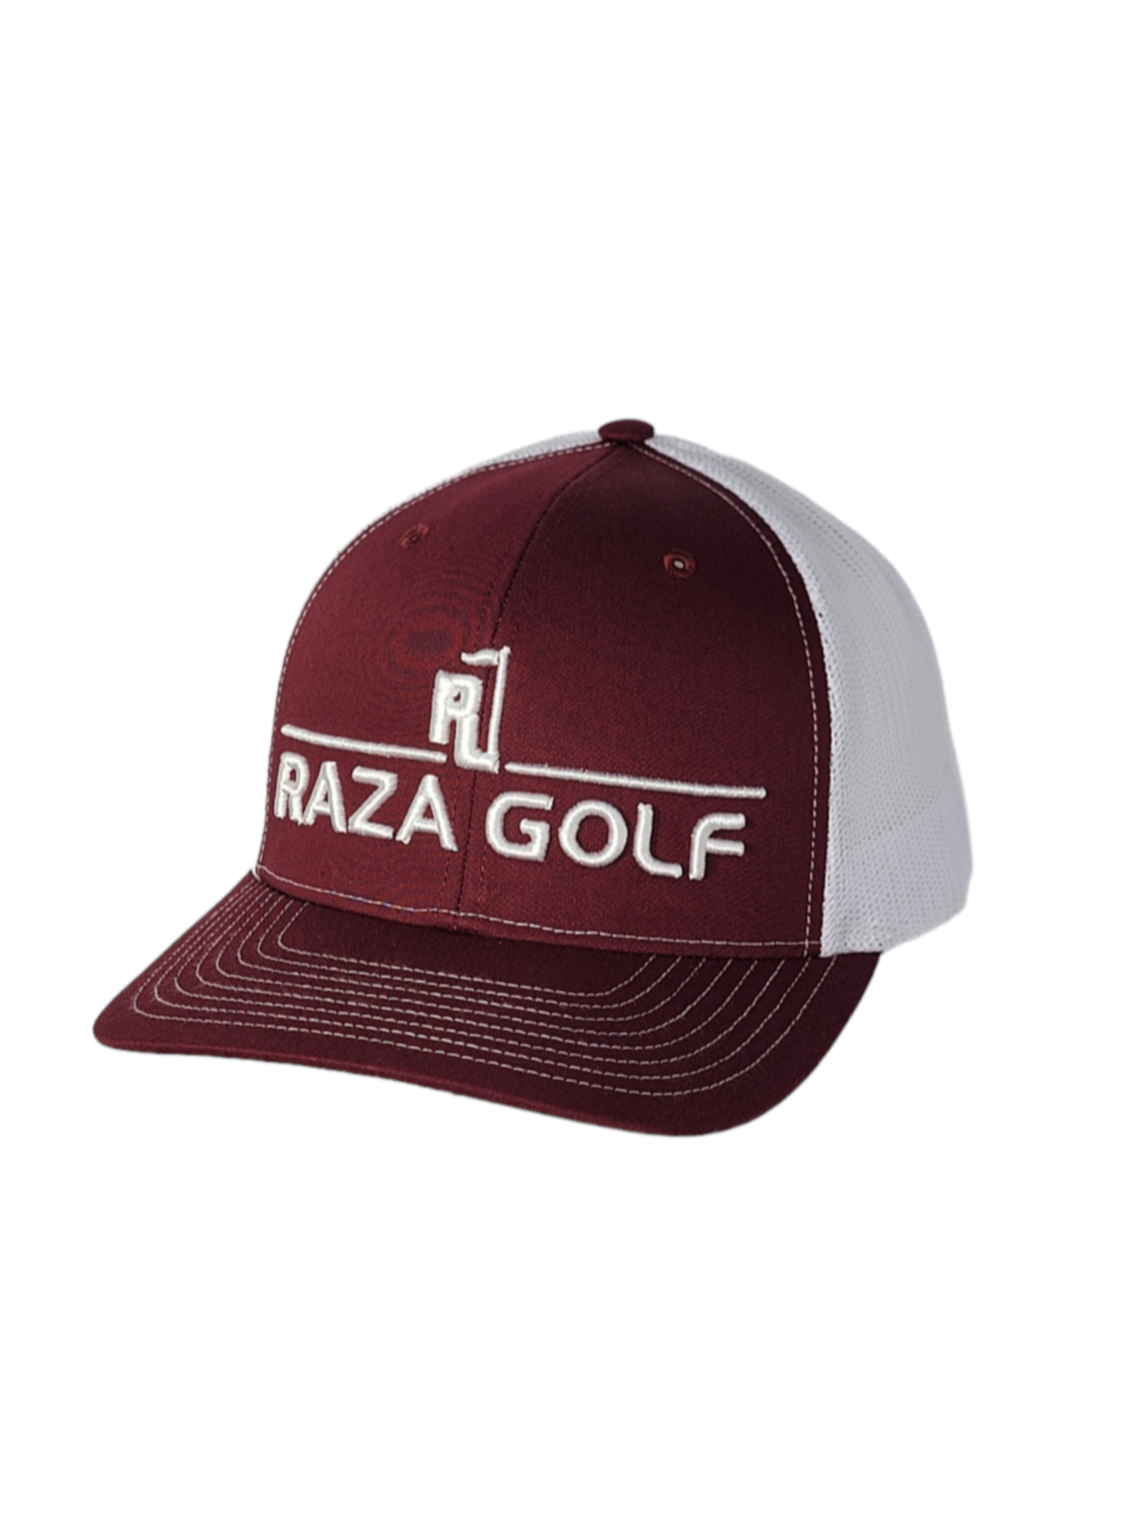 Raza Golf Maroon/White Linear Trucker Hat